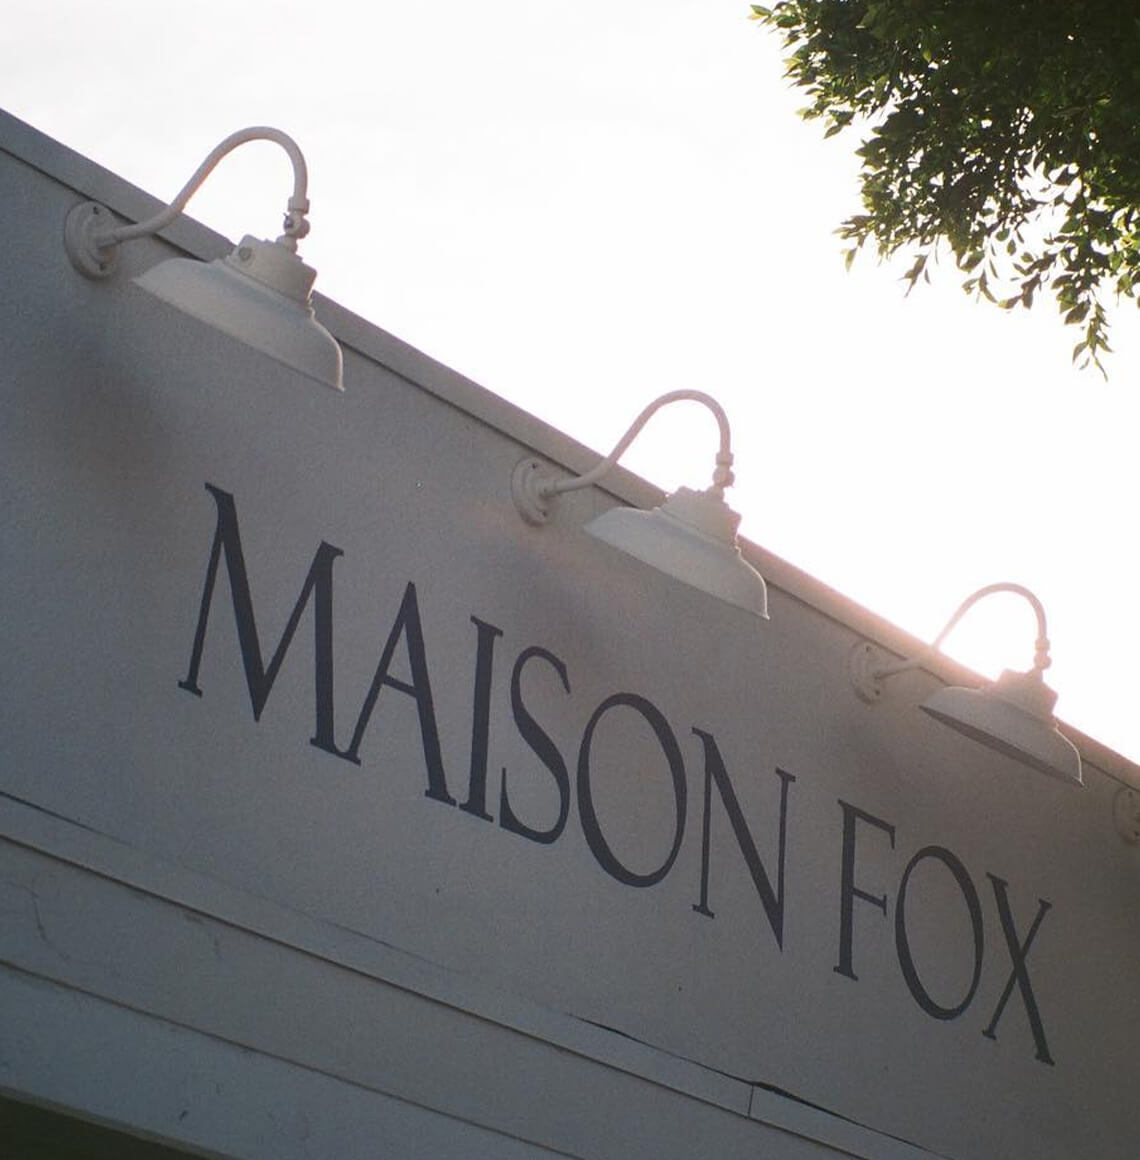 Maison Fox